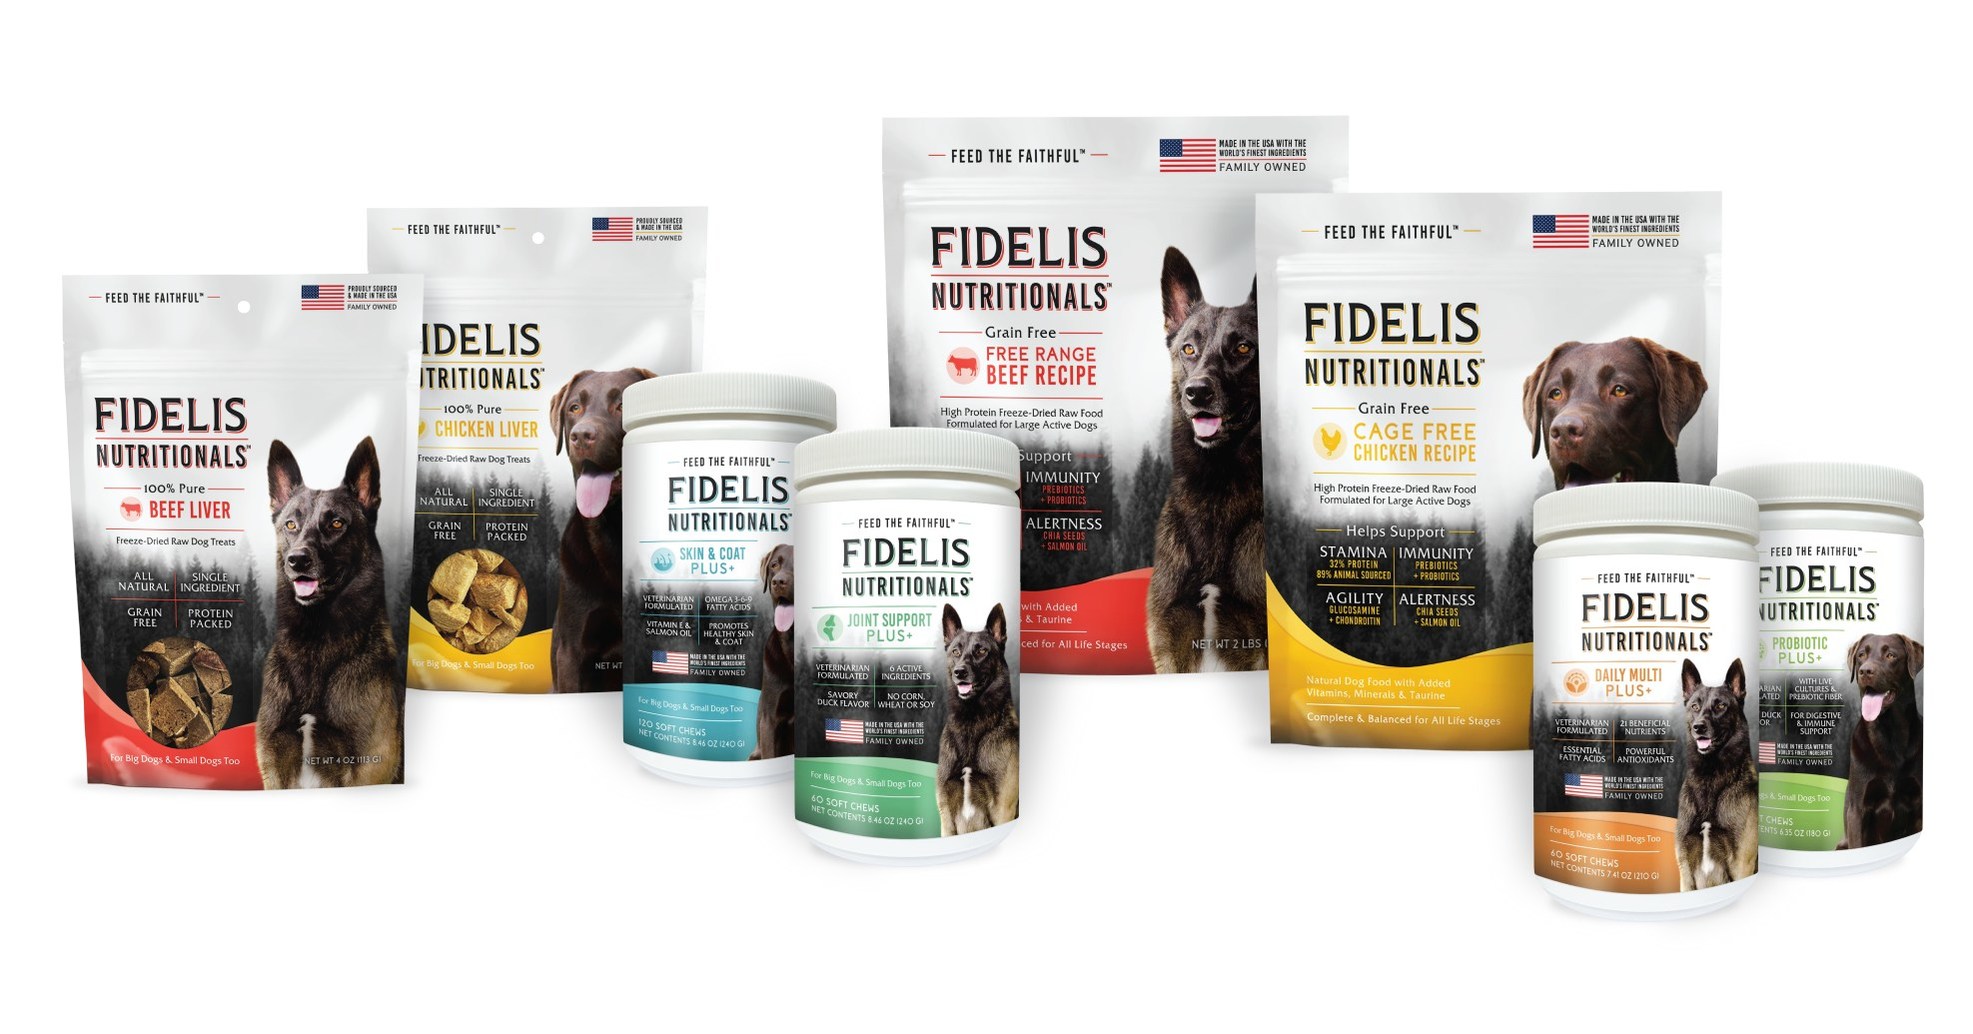 Introducing Fidelis Nutritionals™